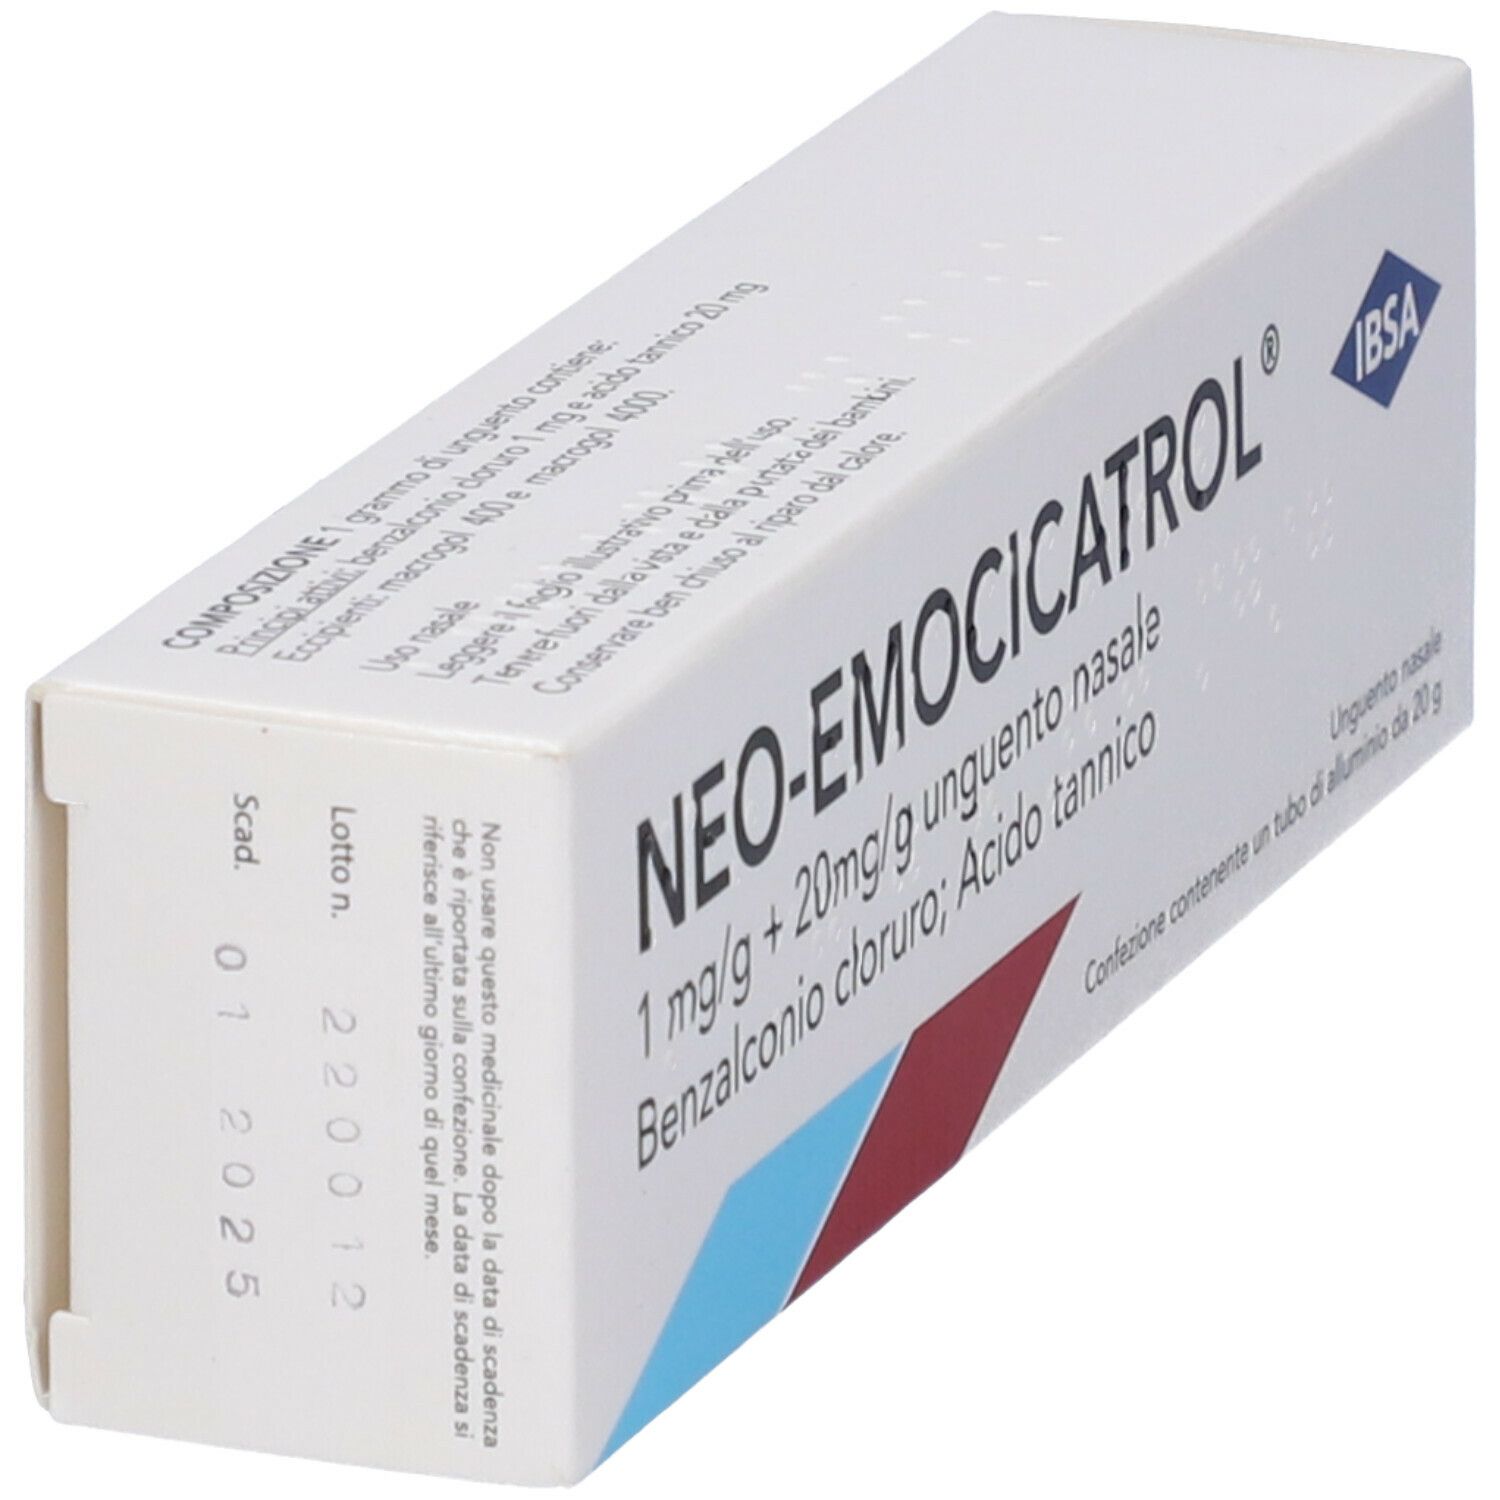 Neo-Emocicatrol®